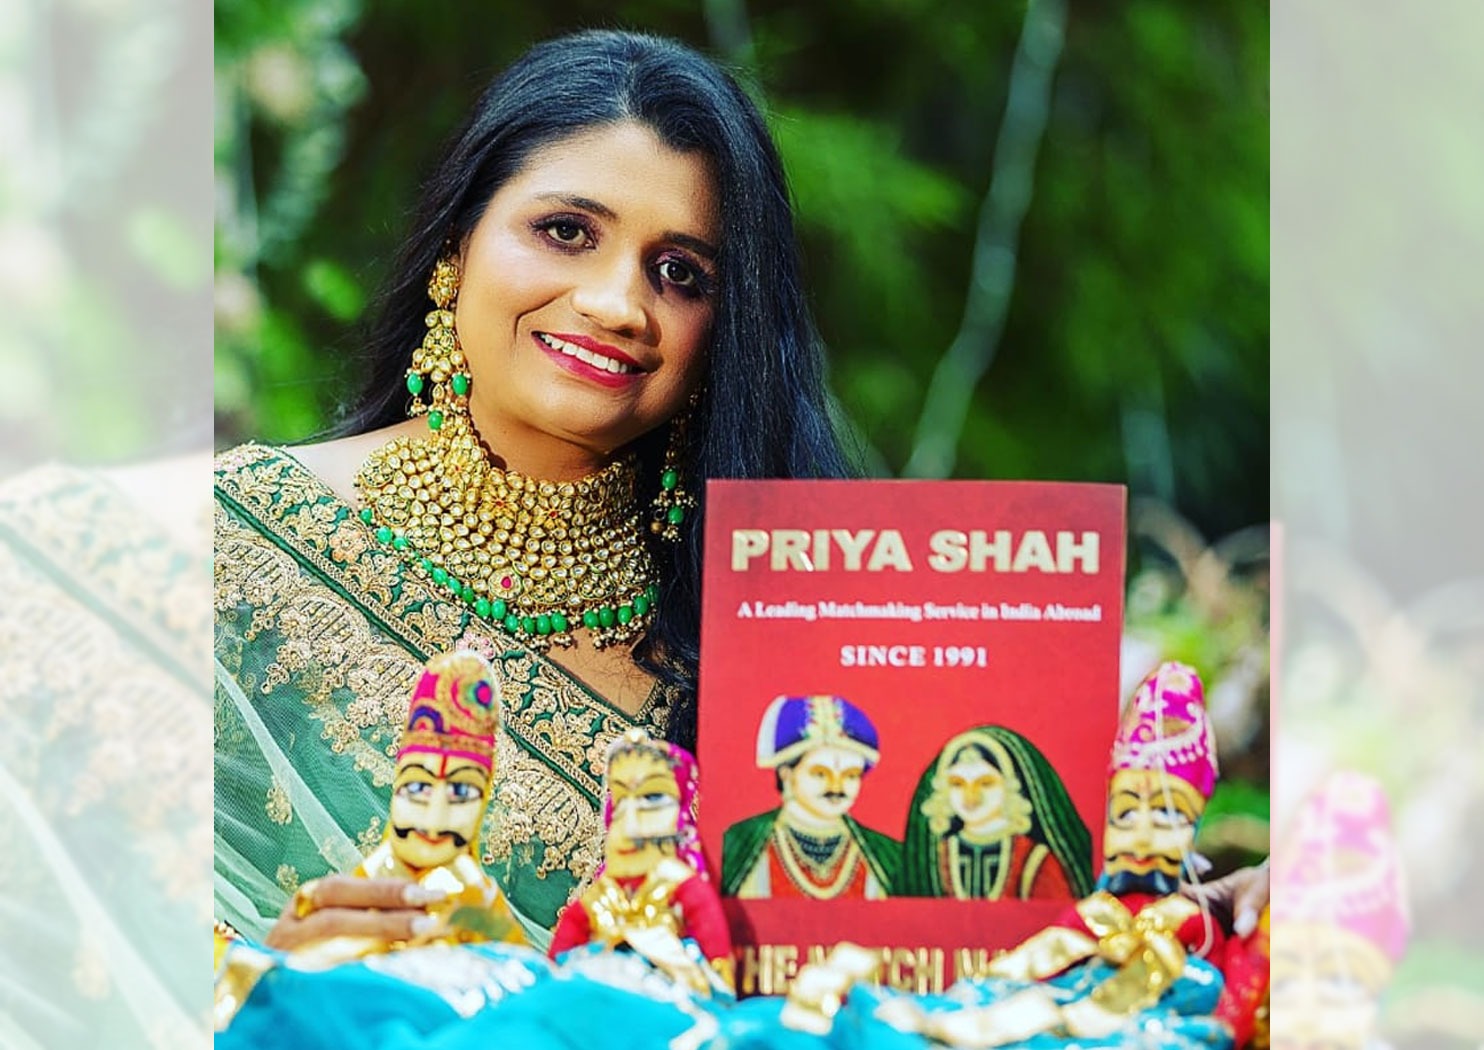 Priya shah a leading matchmaking service